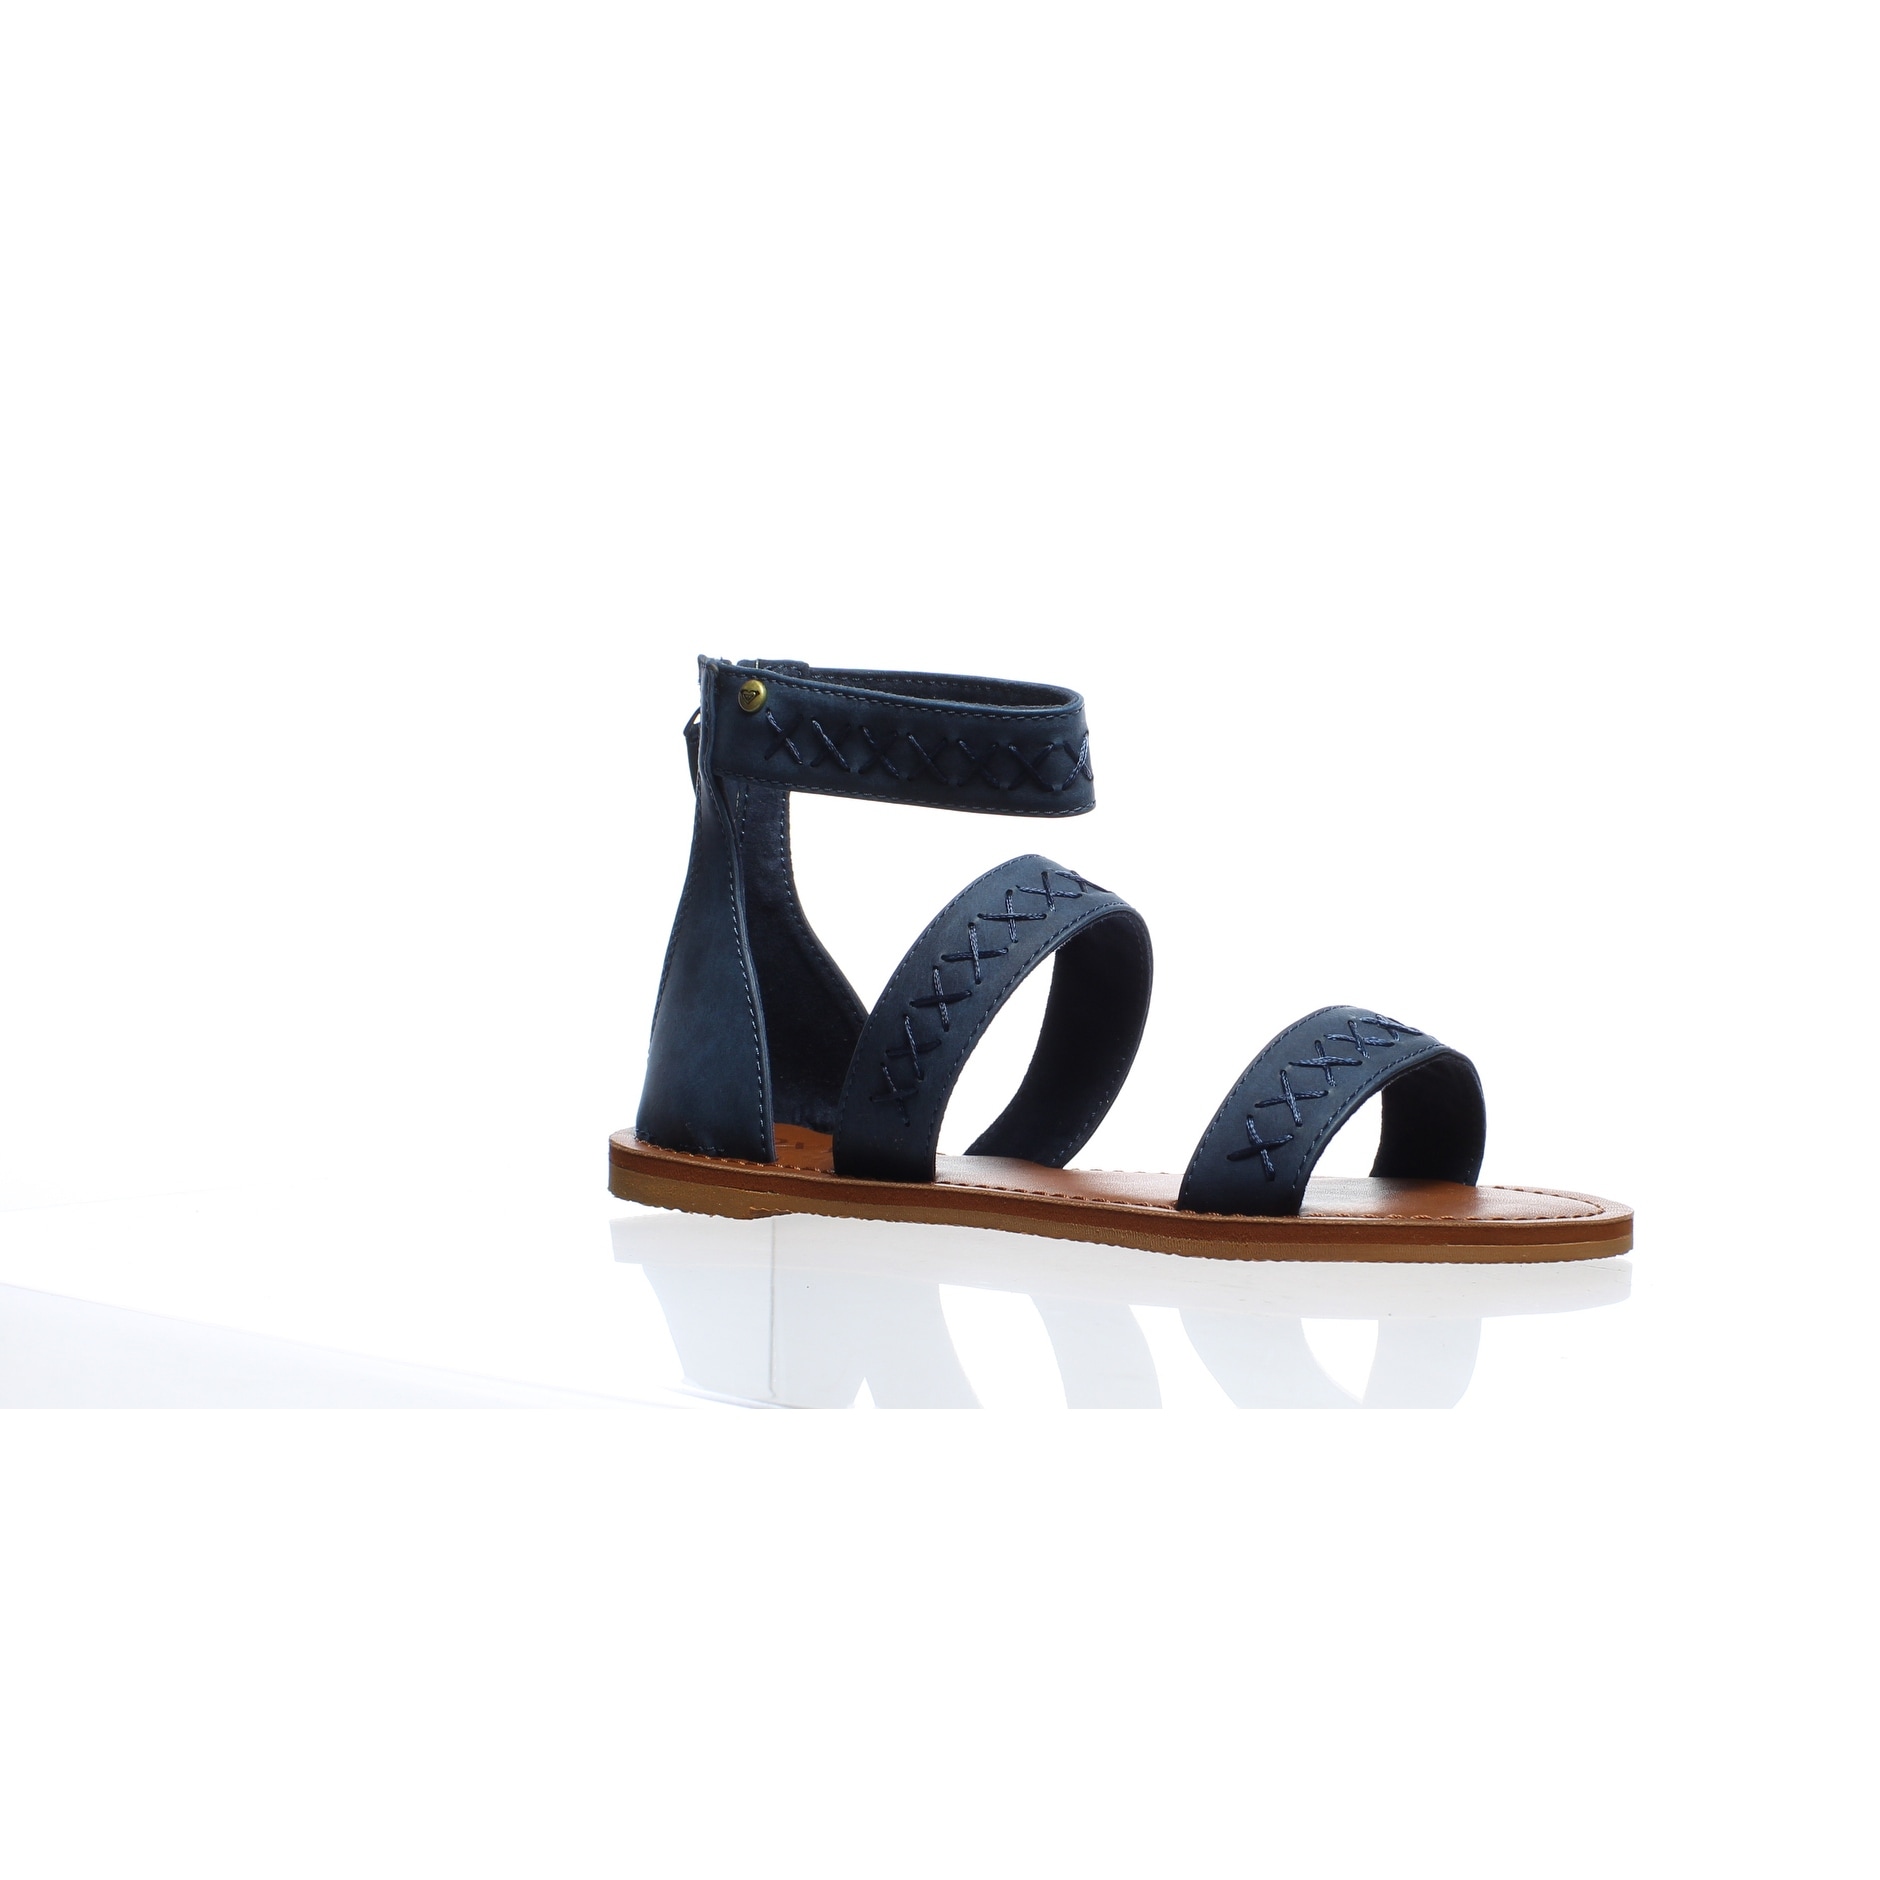 Shop ROXY Womens Navy Sandals Size 6 